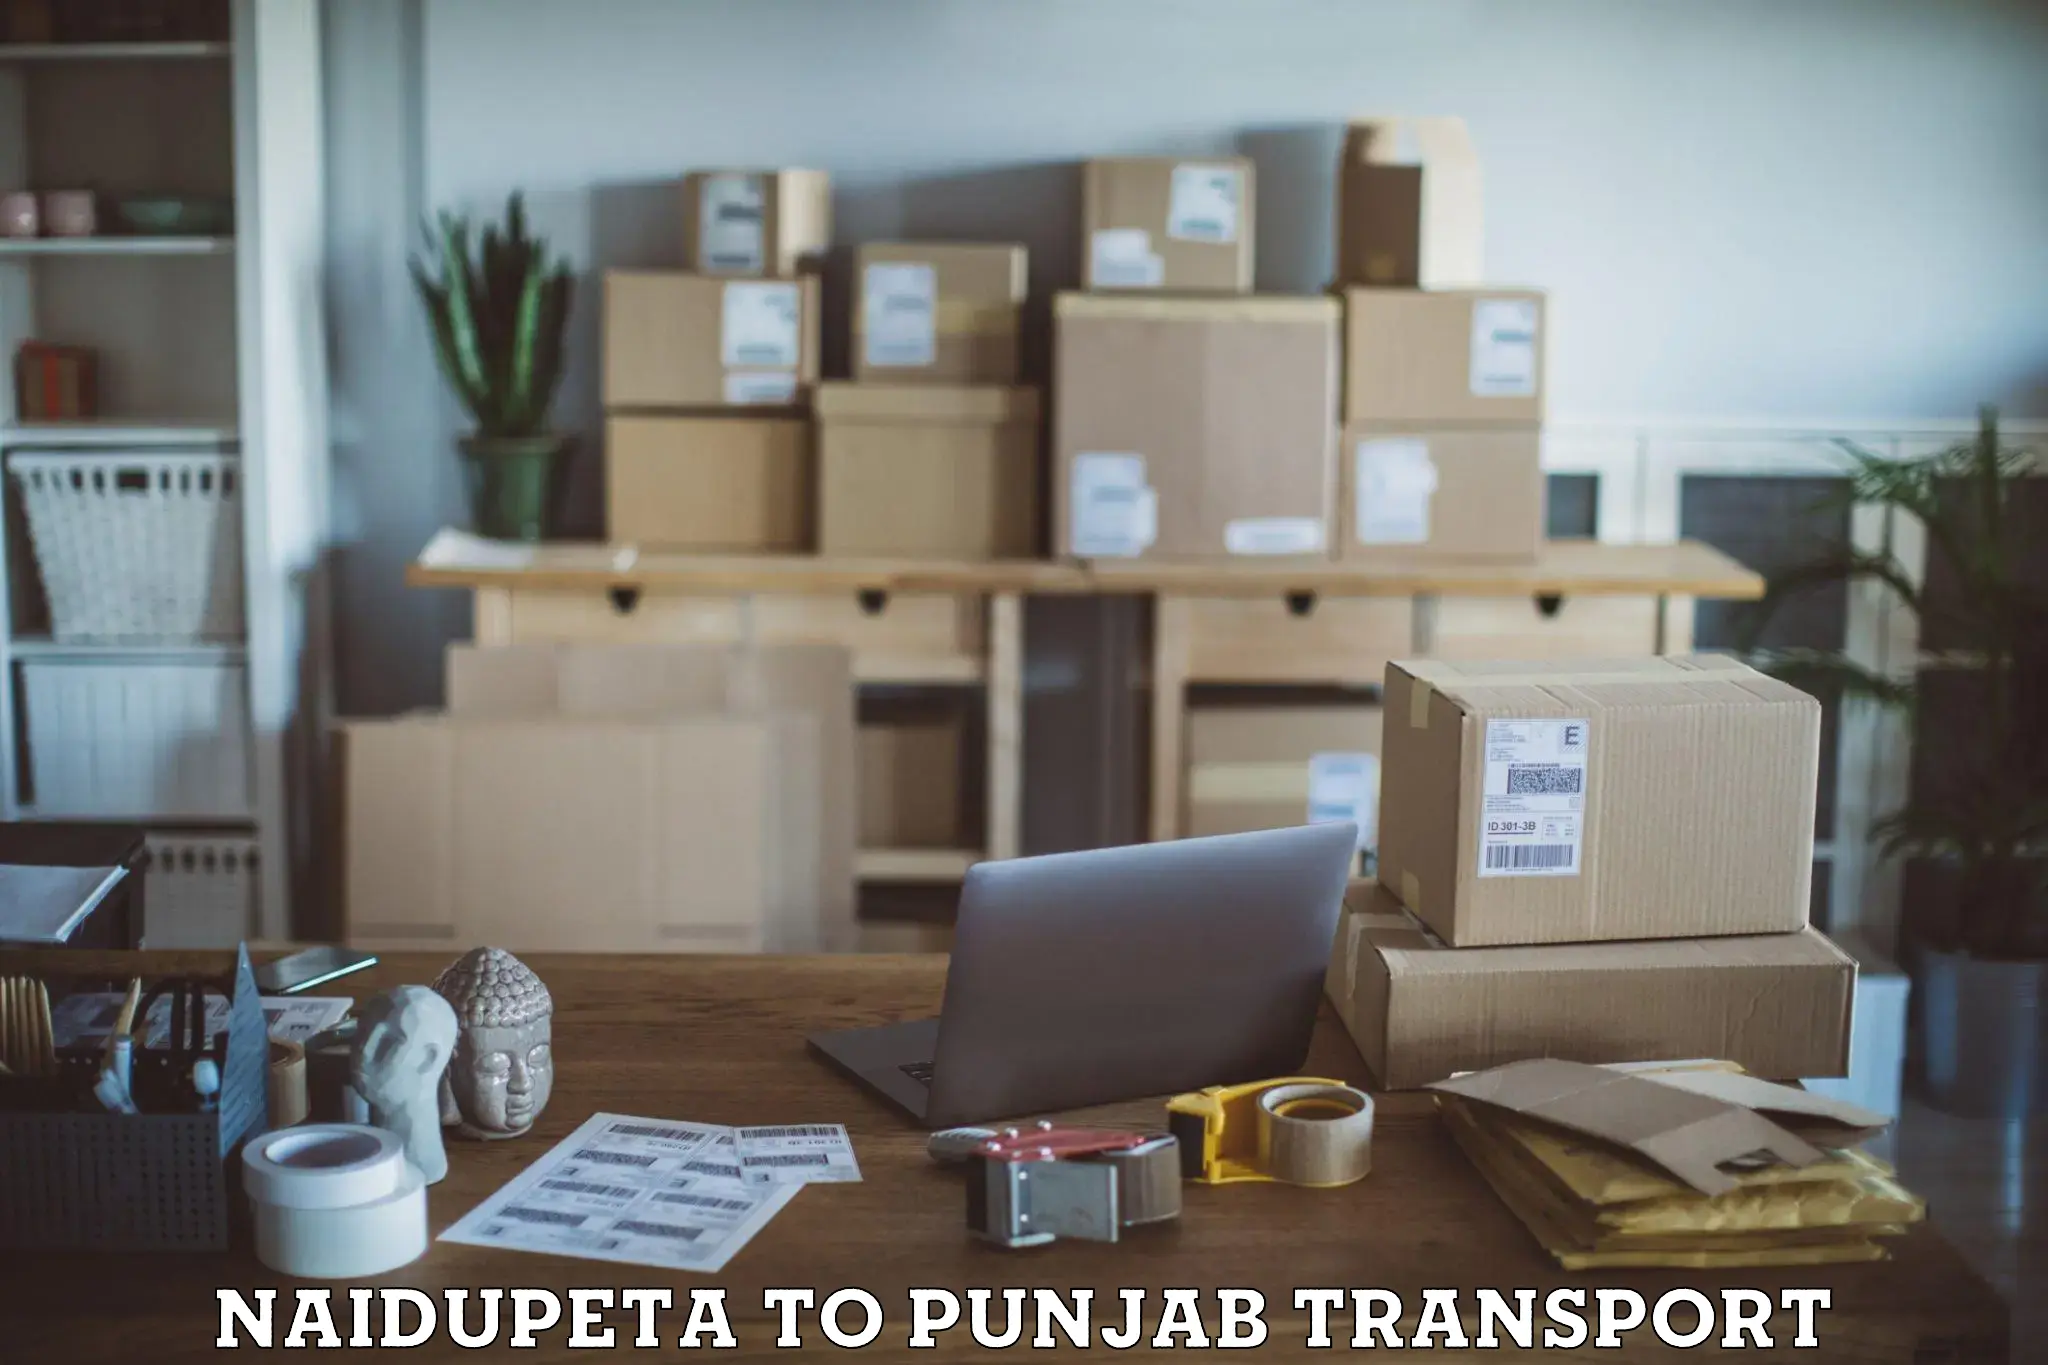 Nearby transport service Naidupeta to Punjab